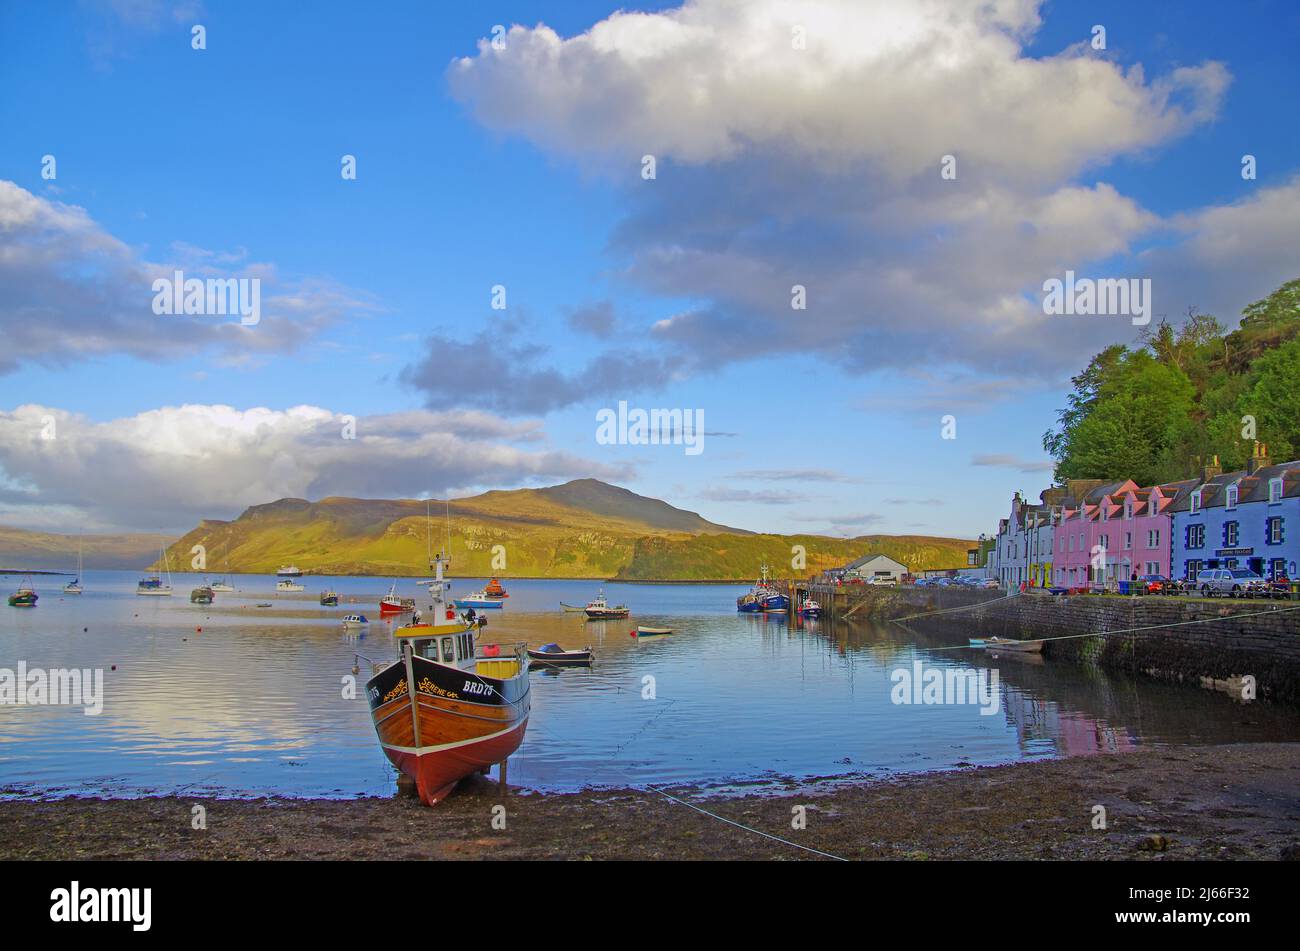 Holzboot und vielfarbige Haeuser im Abendlicht, Portree, Isla de Skye, Hebriden, Schottland, Grossbritannien Foto de stock